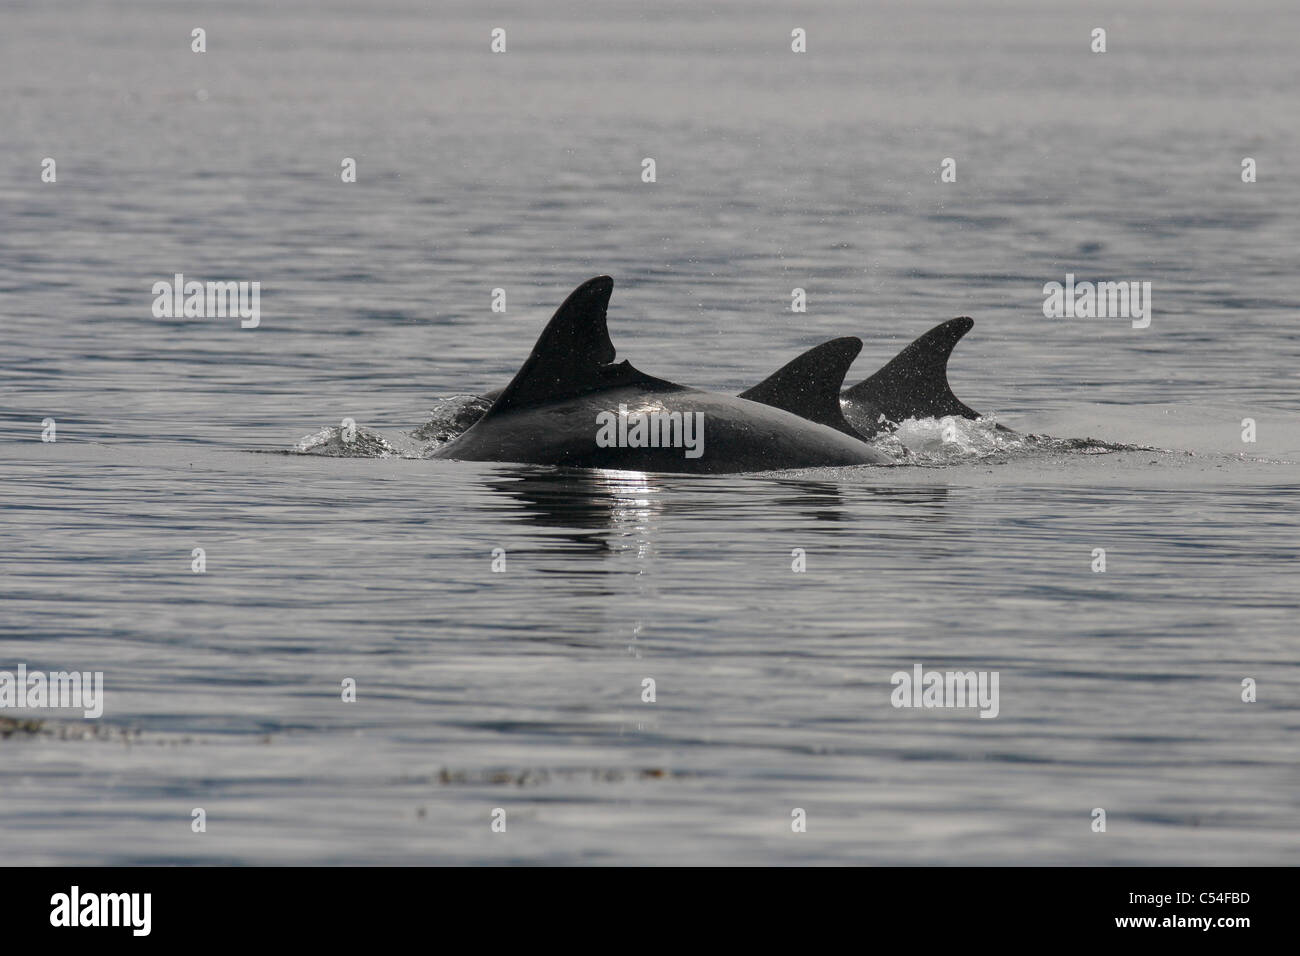 Group of Bottlenose dolphins (tursiops truncatus), Moray Firth, Scotland, UK Stock Photo